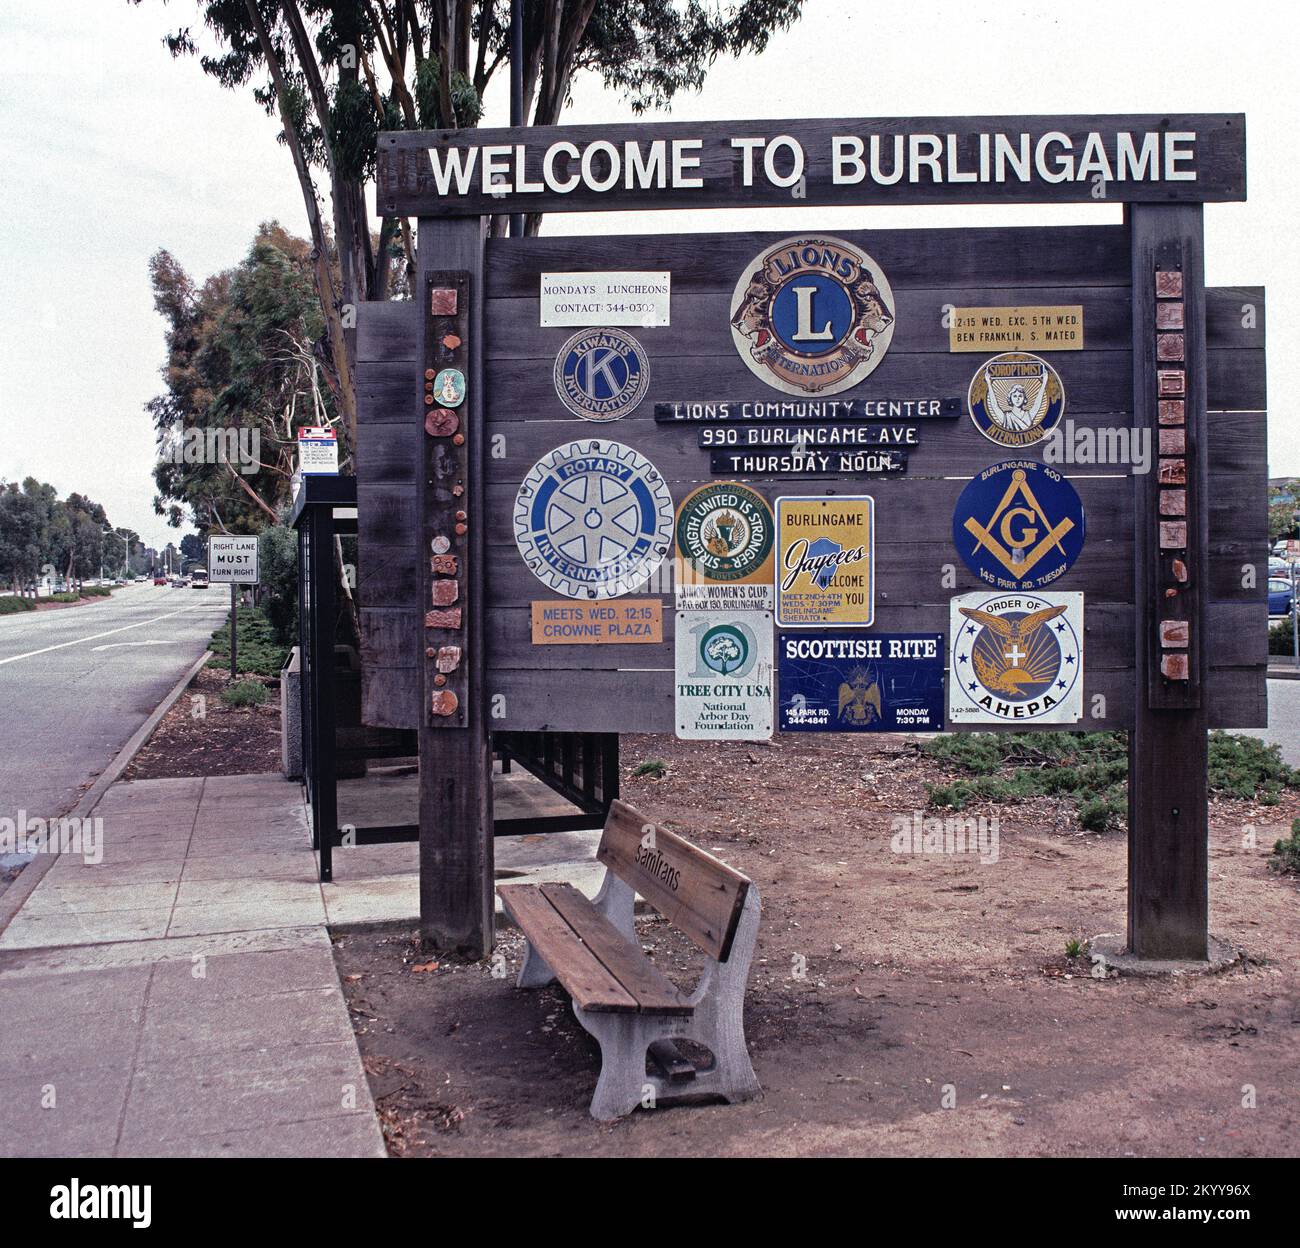 Bienvenido a la parada de autobús Burlingame Samtrans, California, 1996 Foto de stock